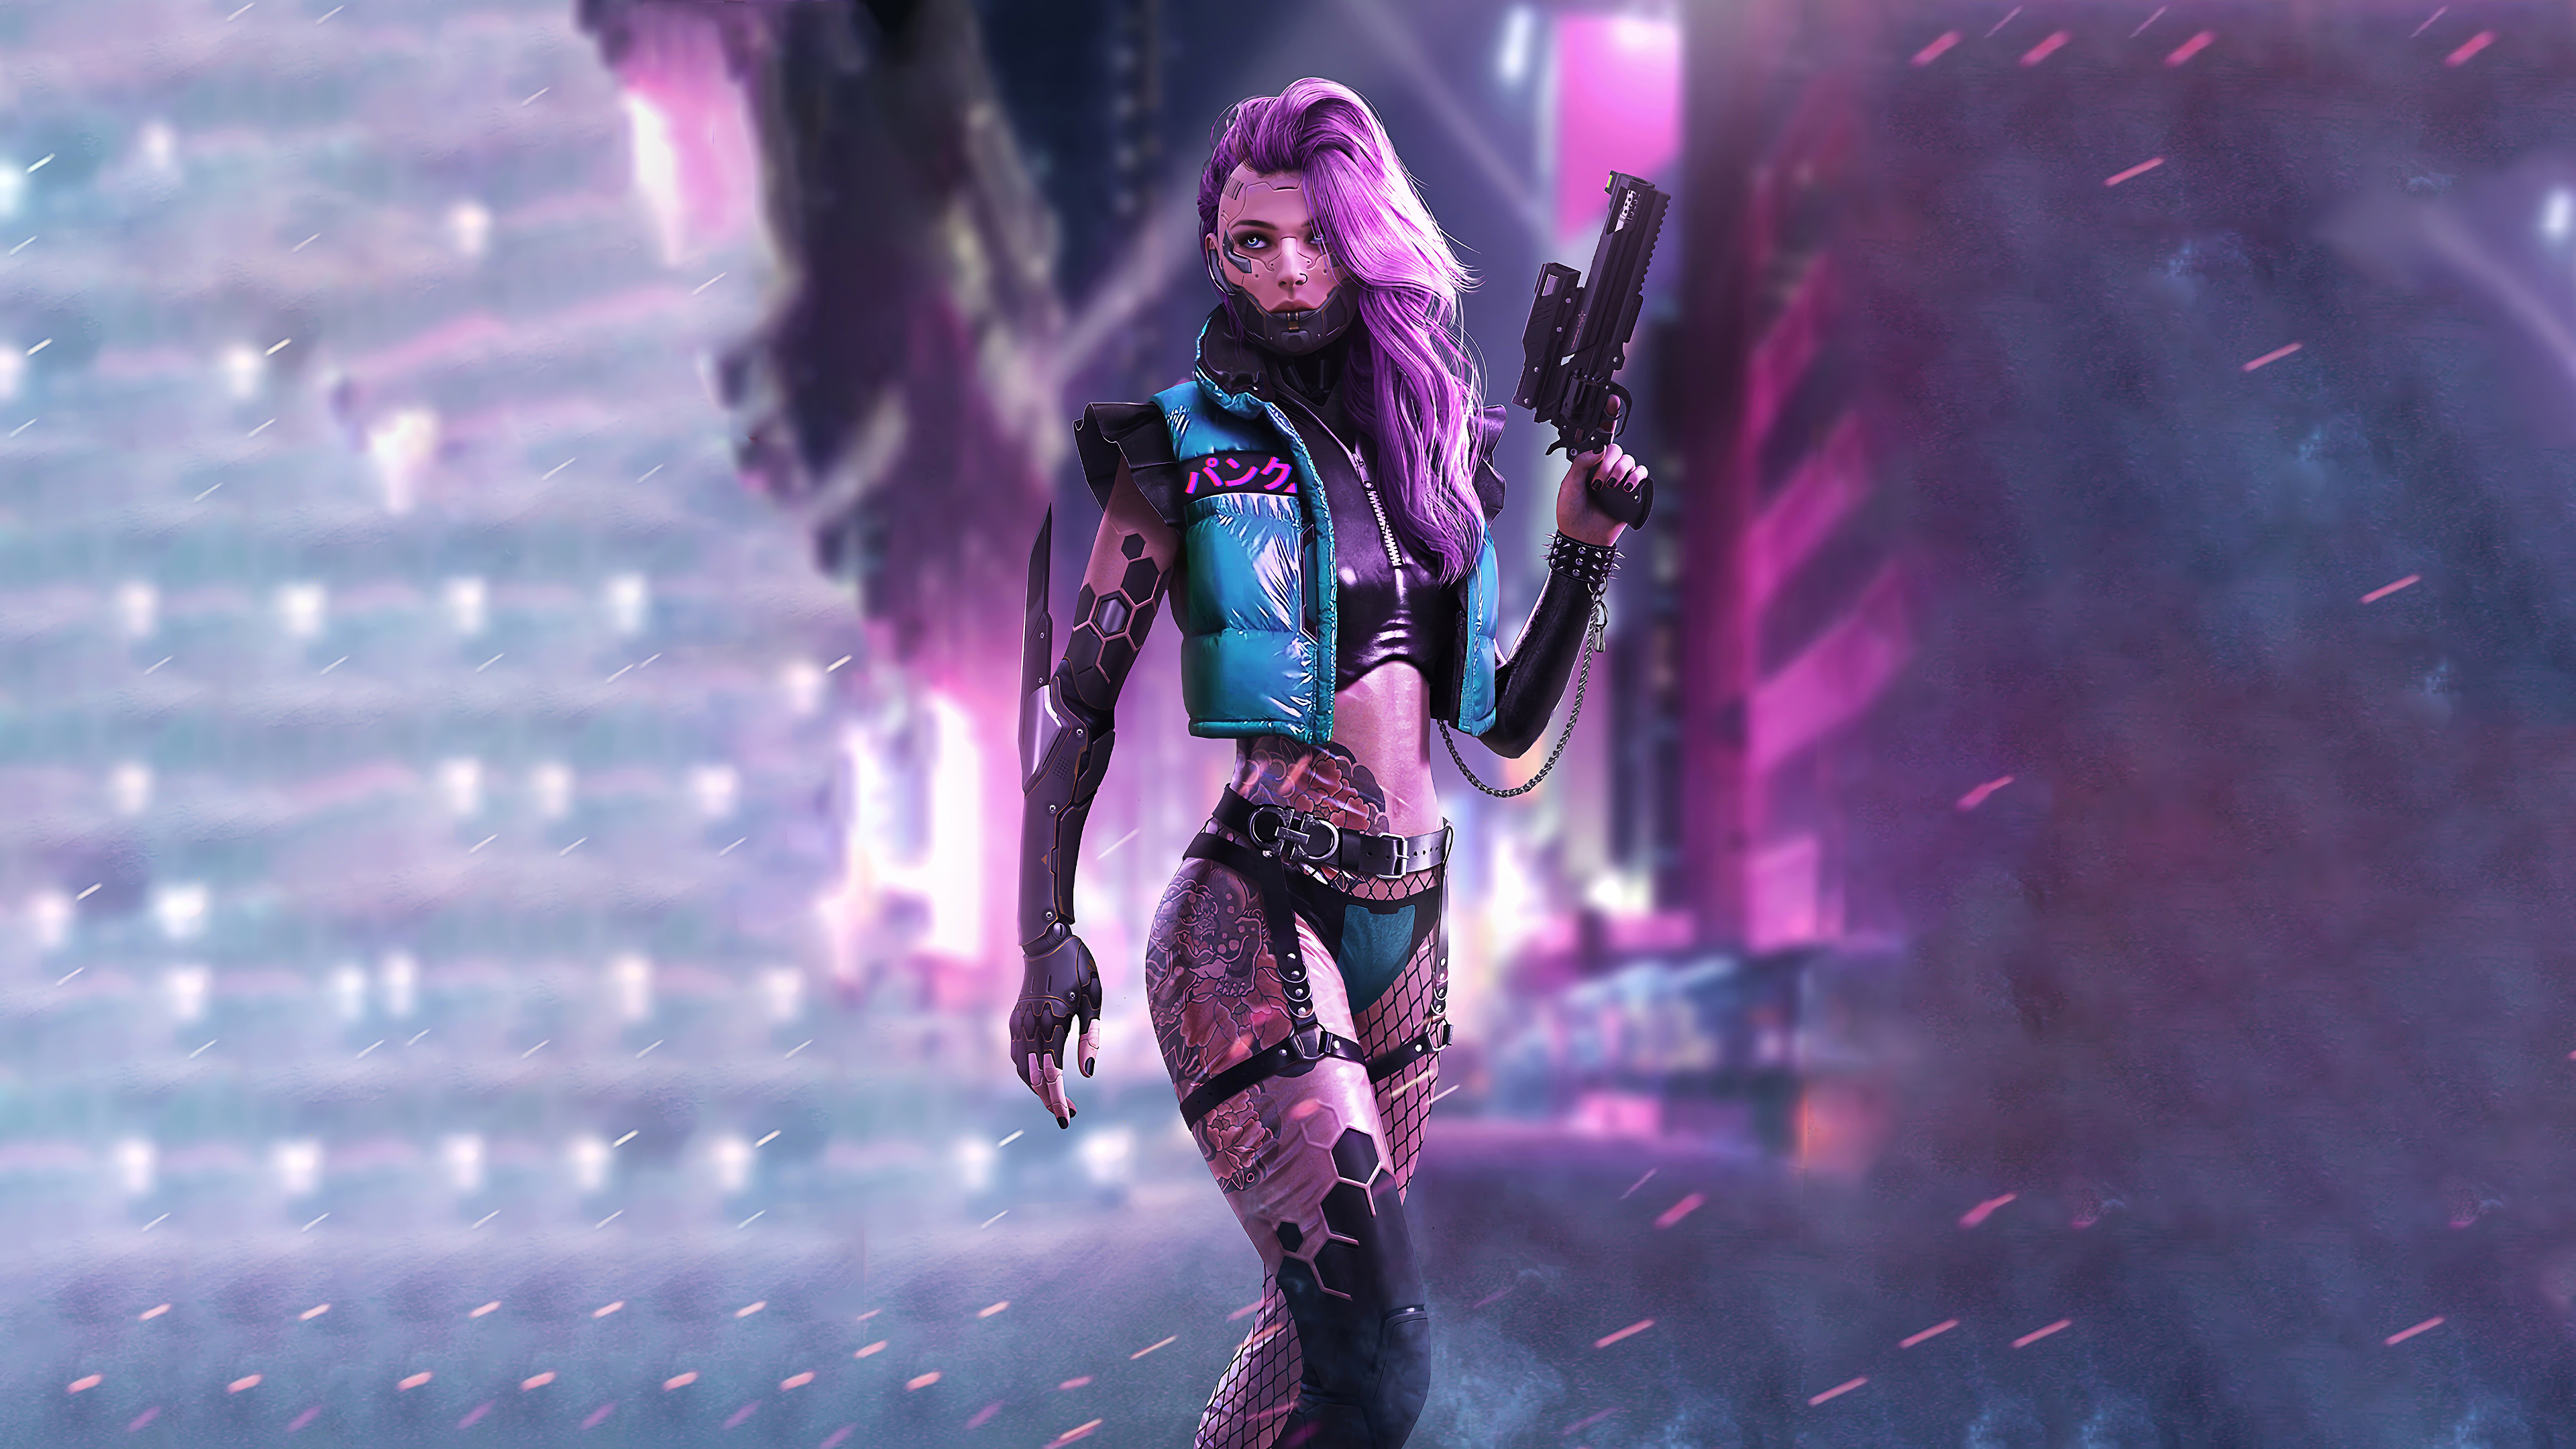 Wallpaper, cyberpunk, Girl With Weapon, science fiction, futuristic, cyborg 3840x2160ец